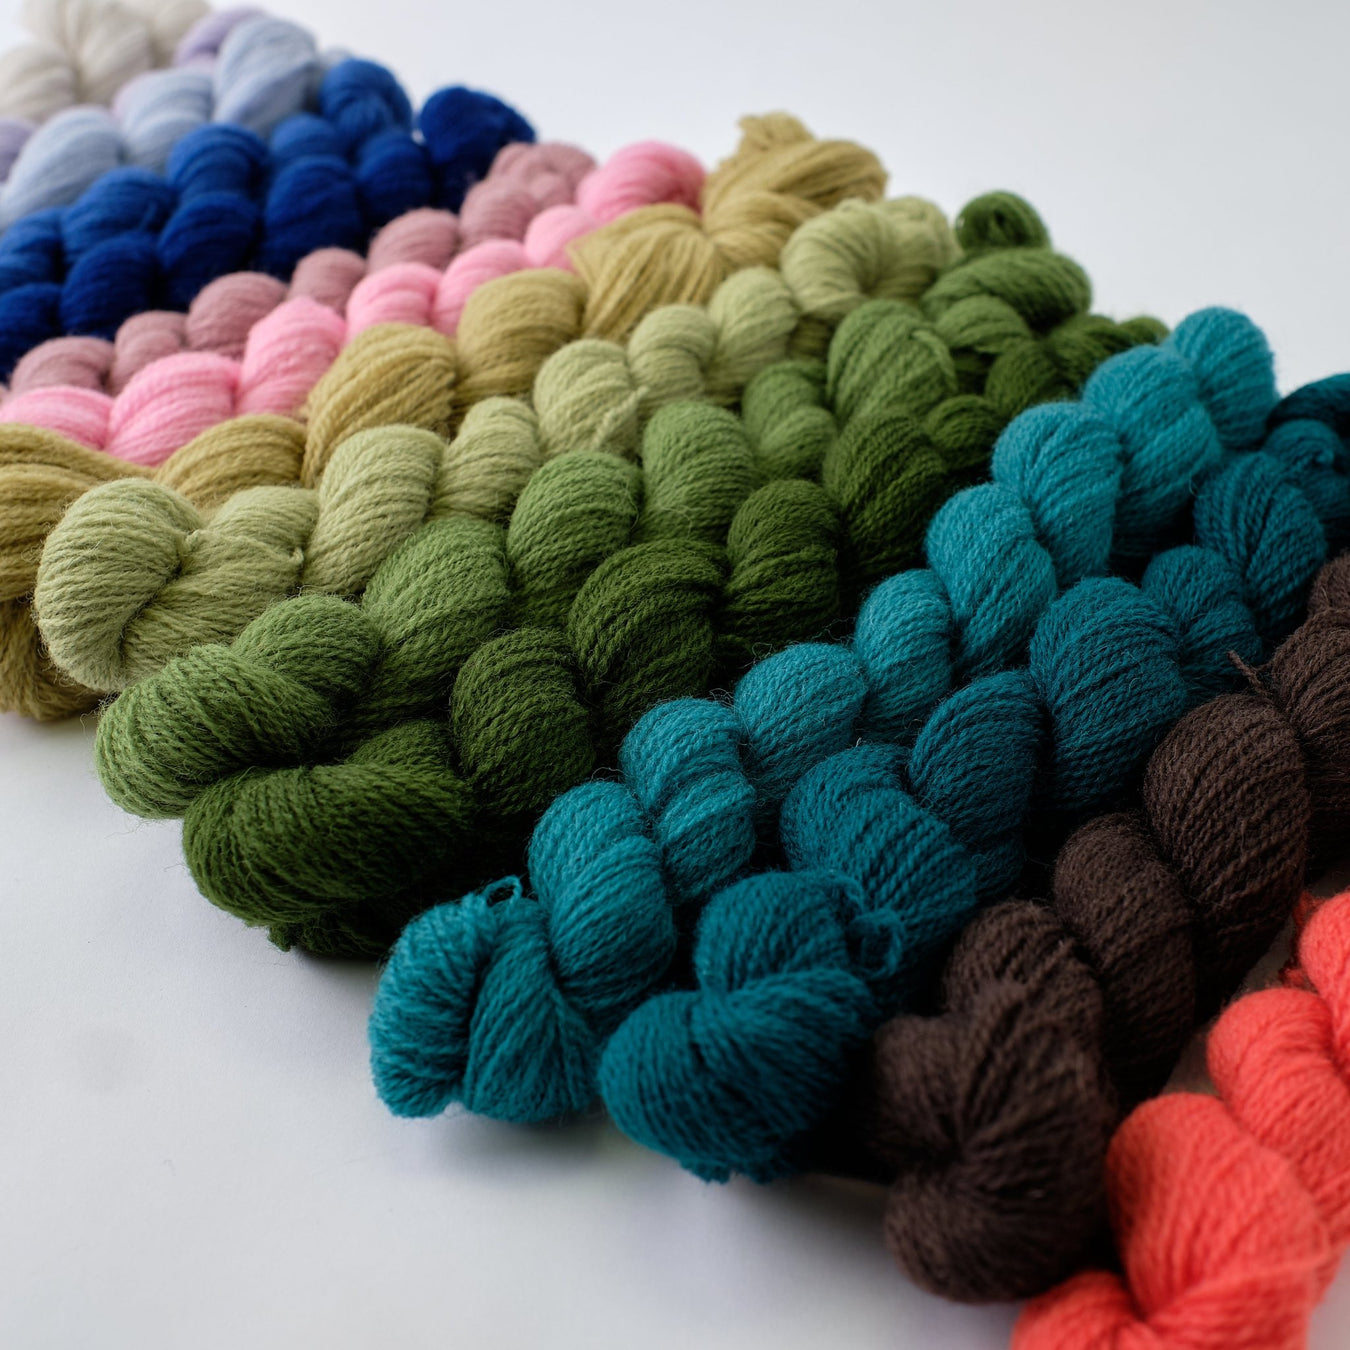 Versatile Wool Yarns for Crafting